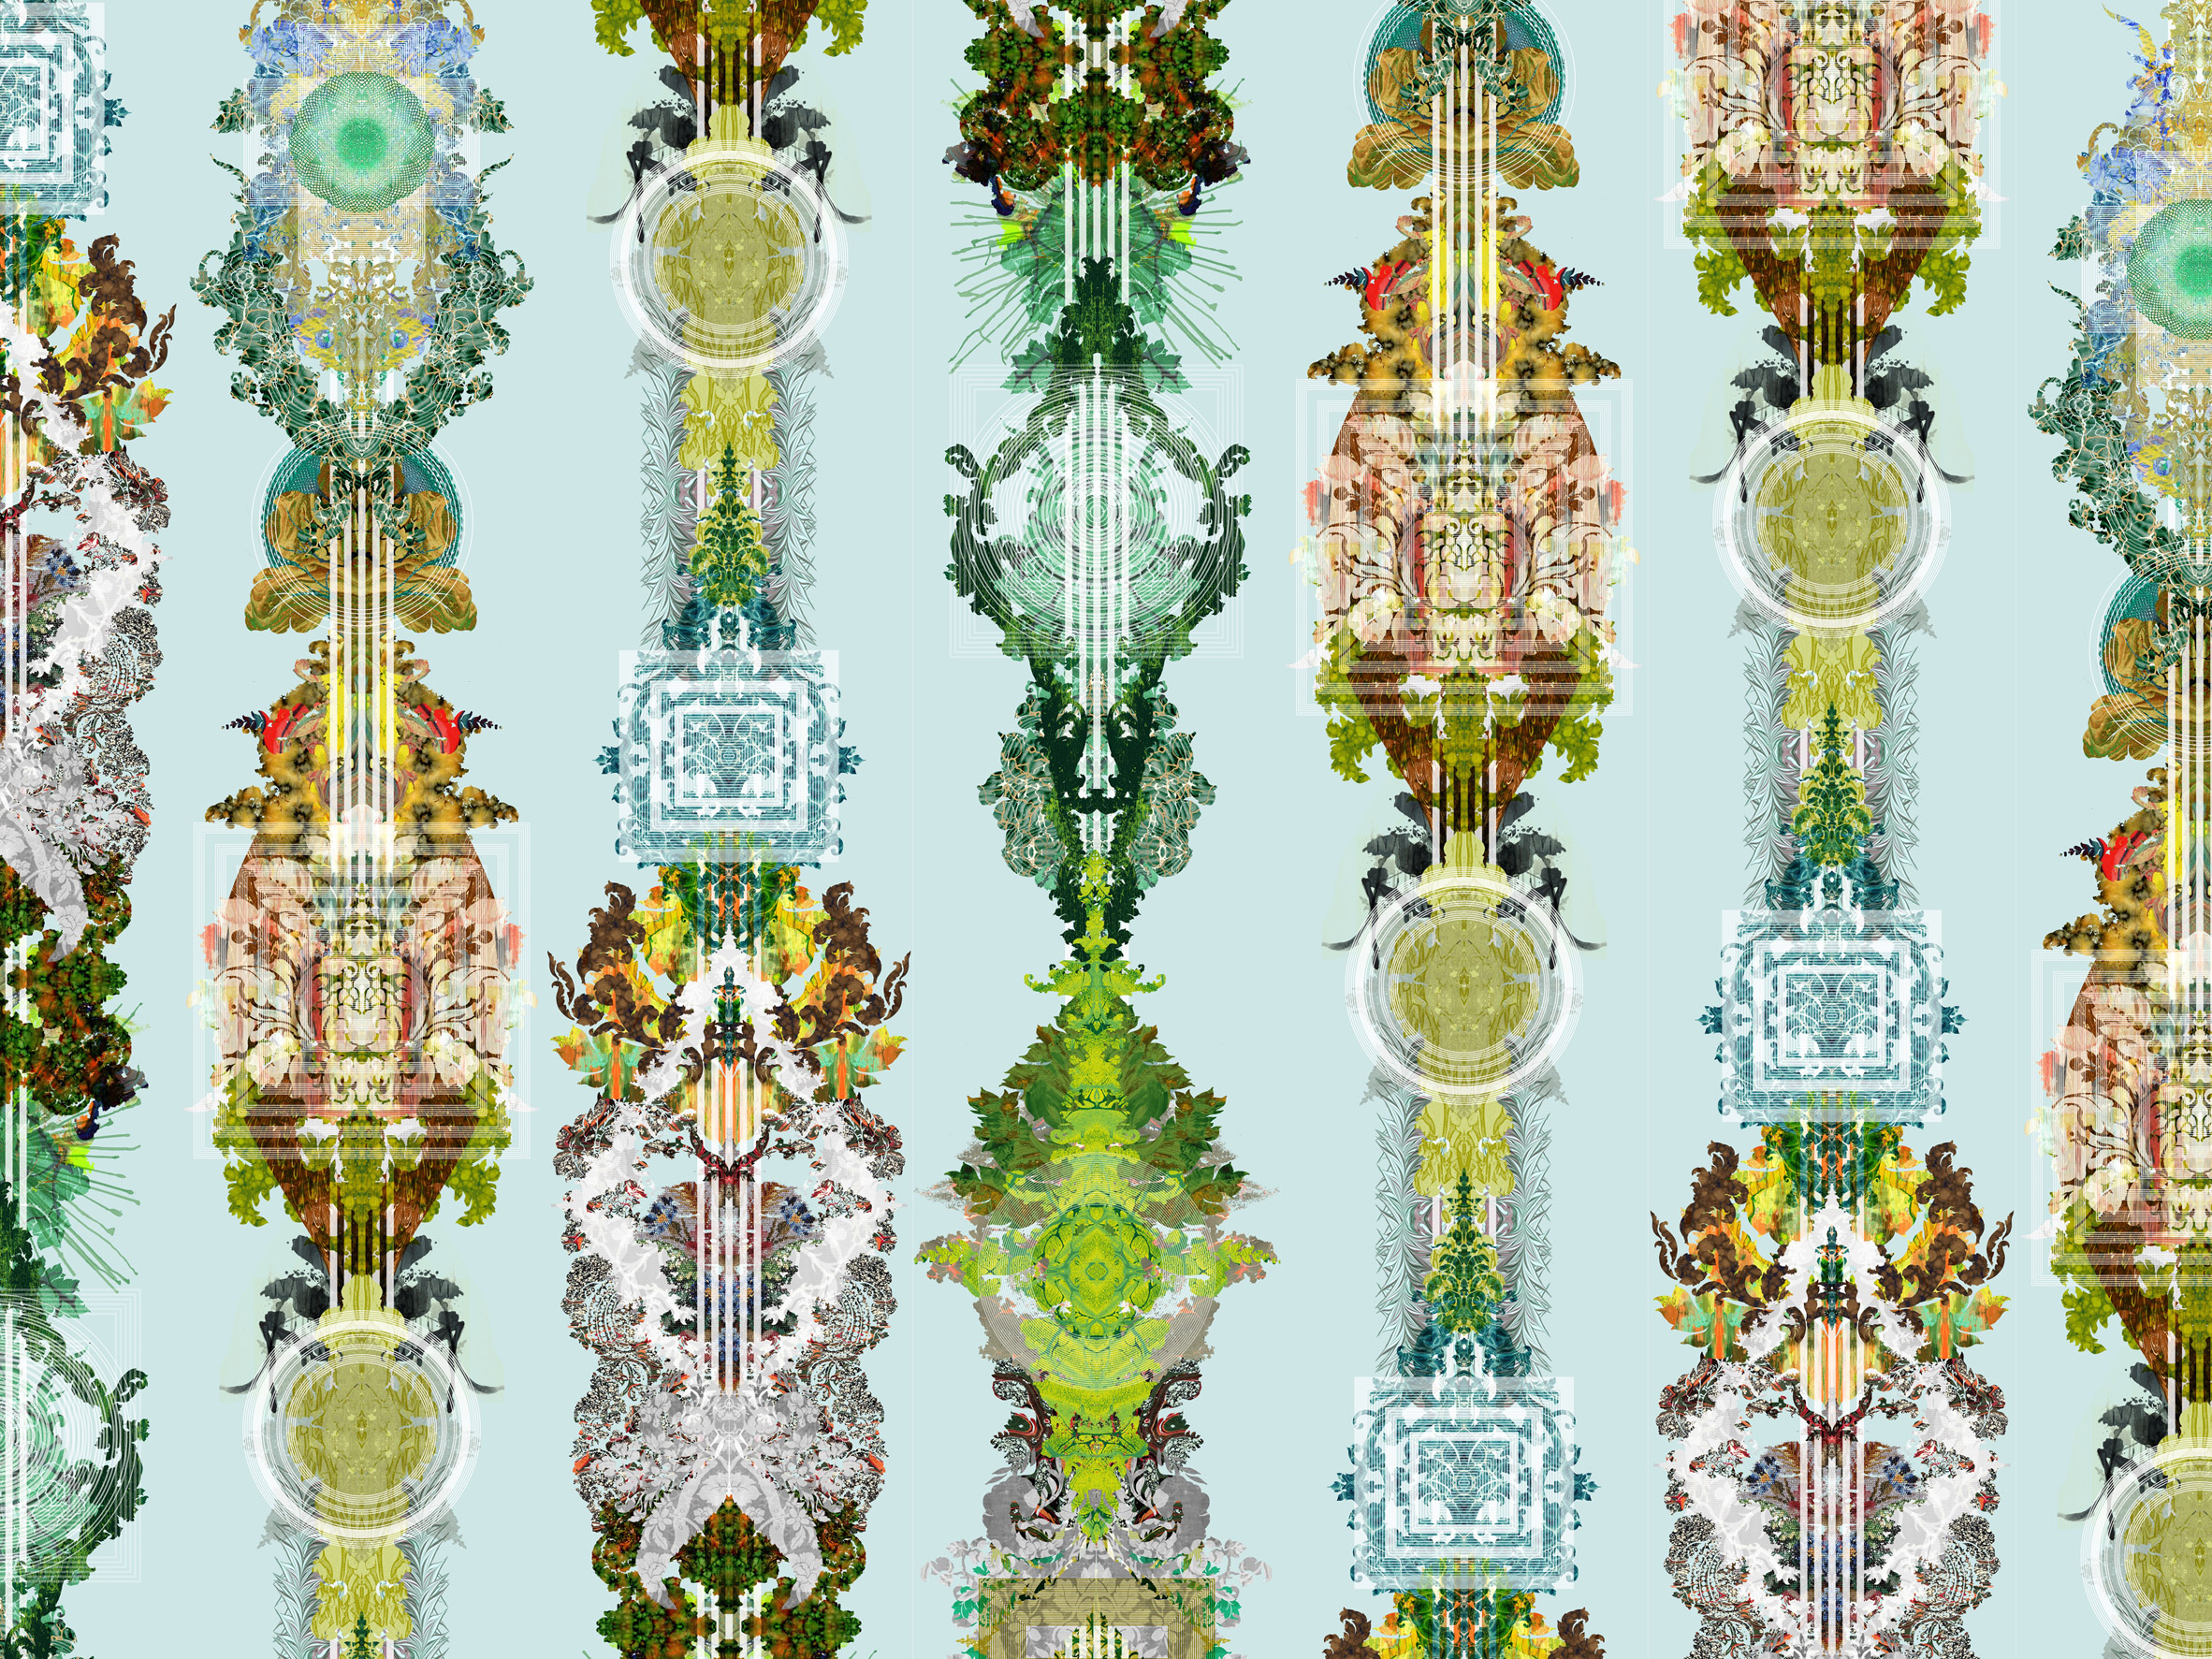 Timorous Beasties' wallpaper series features totemic patterns